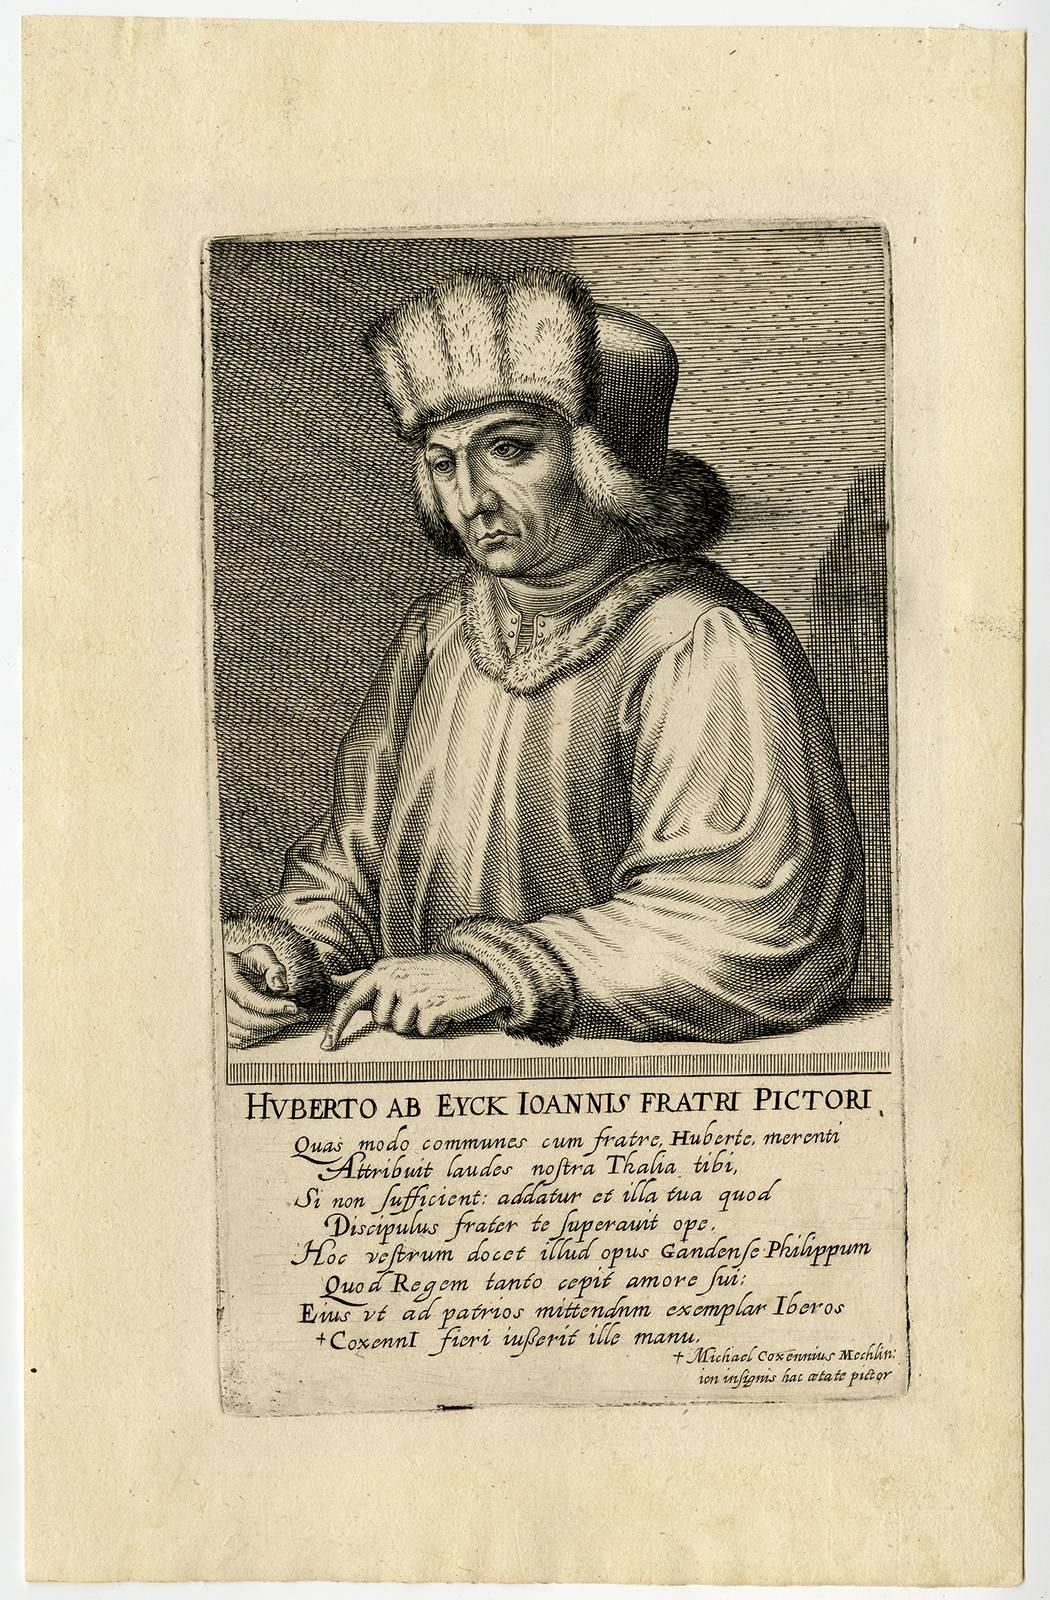 Huberto ab Eyck Ioannis Fratri Pictori. - Print by Hendrik Hondius the Elder